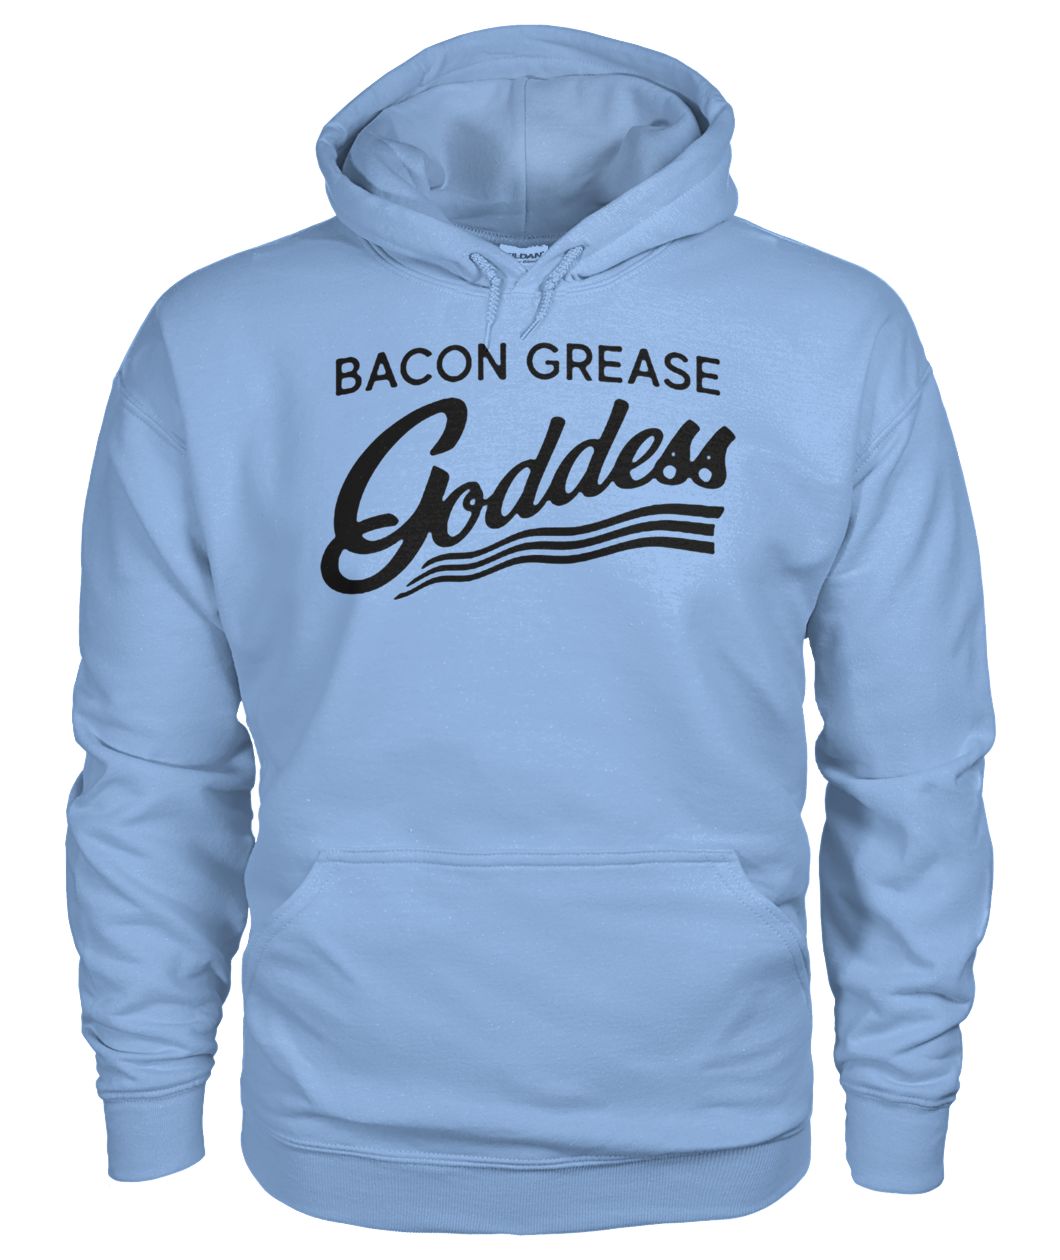 Bacon grease goddess gildan hoodie